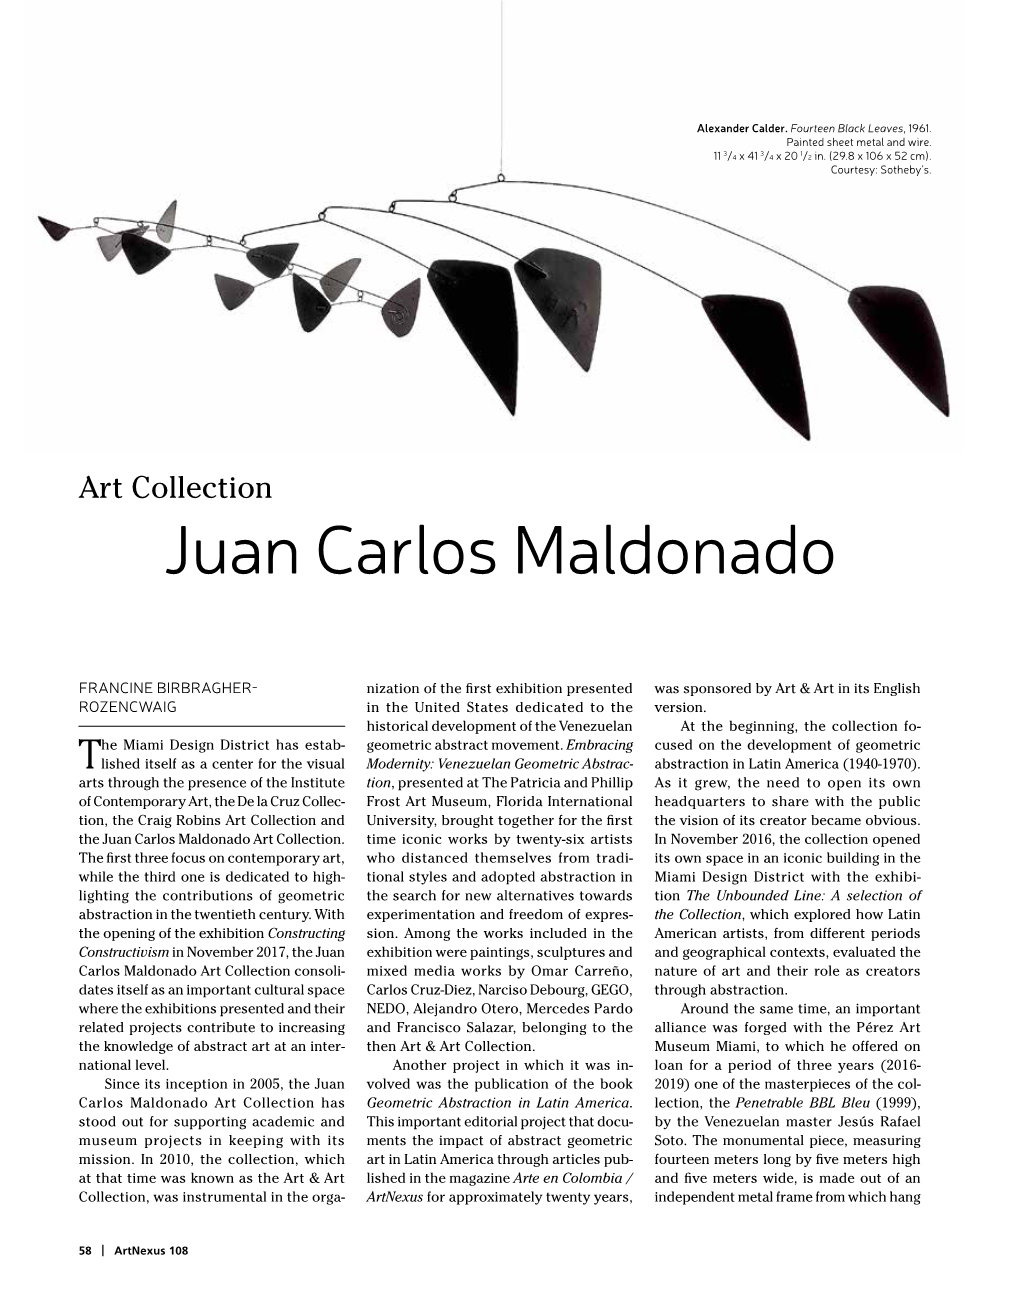 Juan Carlos Maldonado Art Collection JCMAC